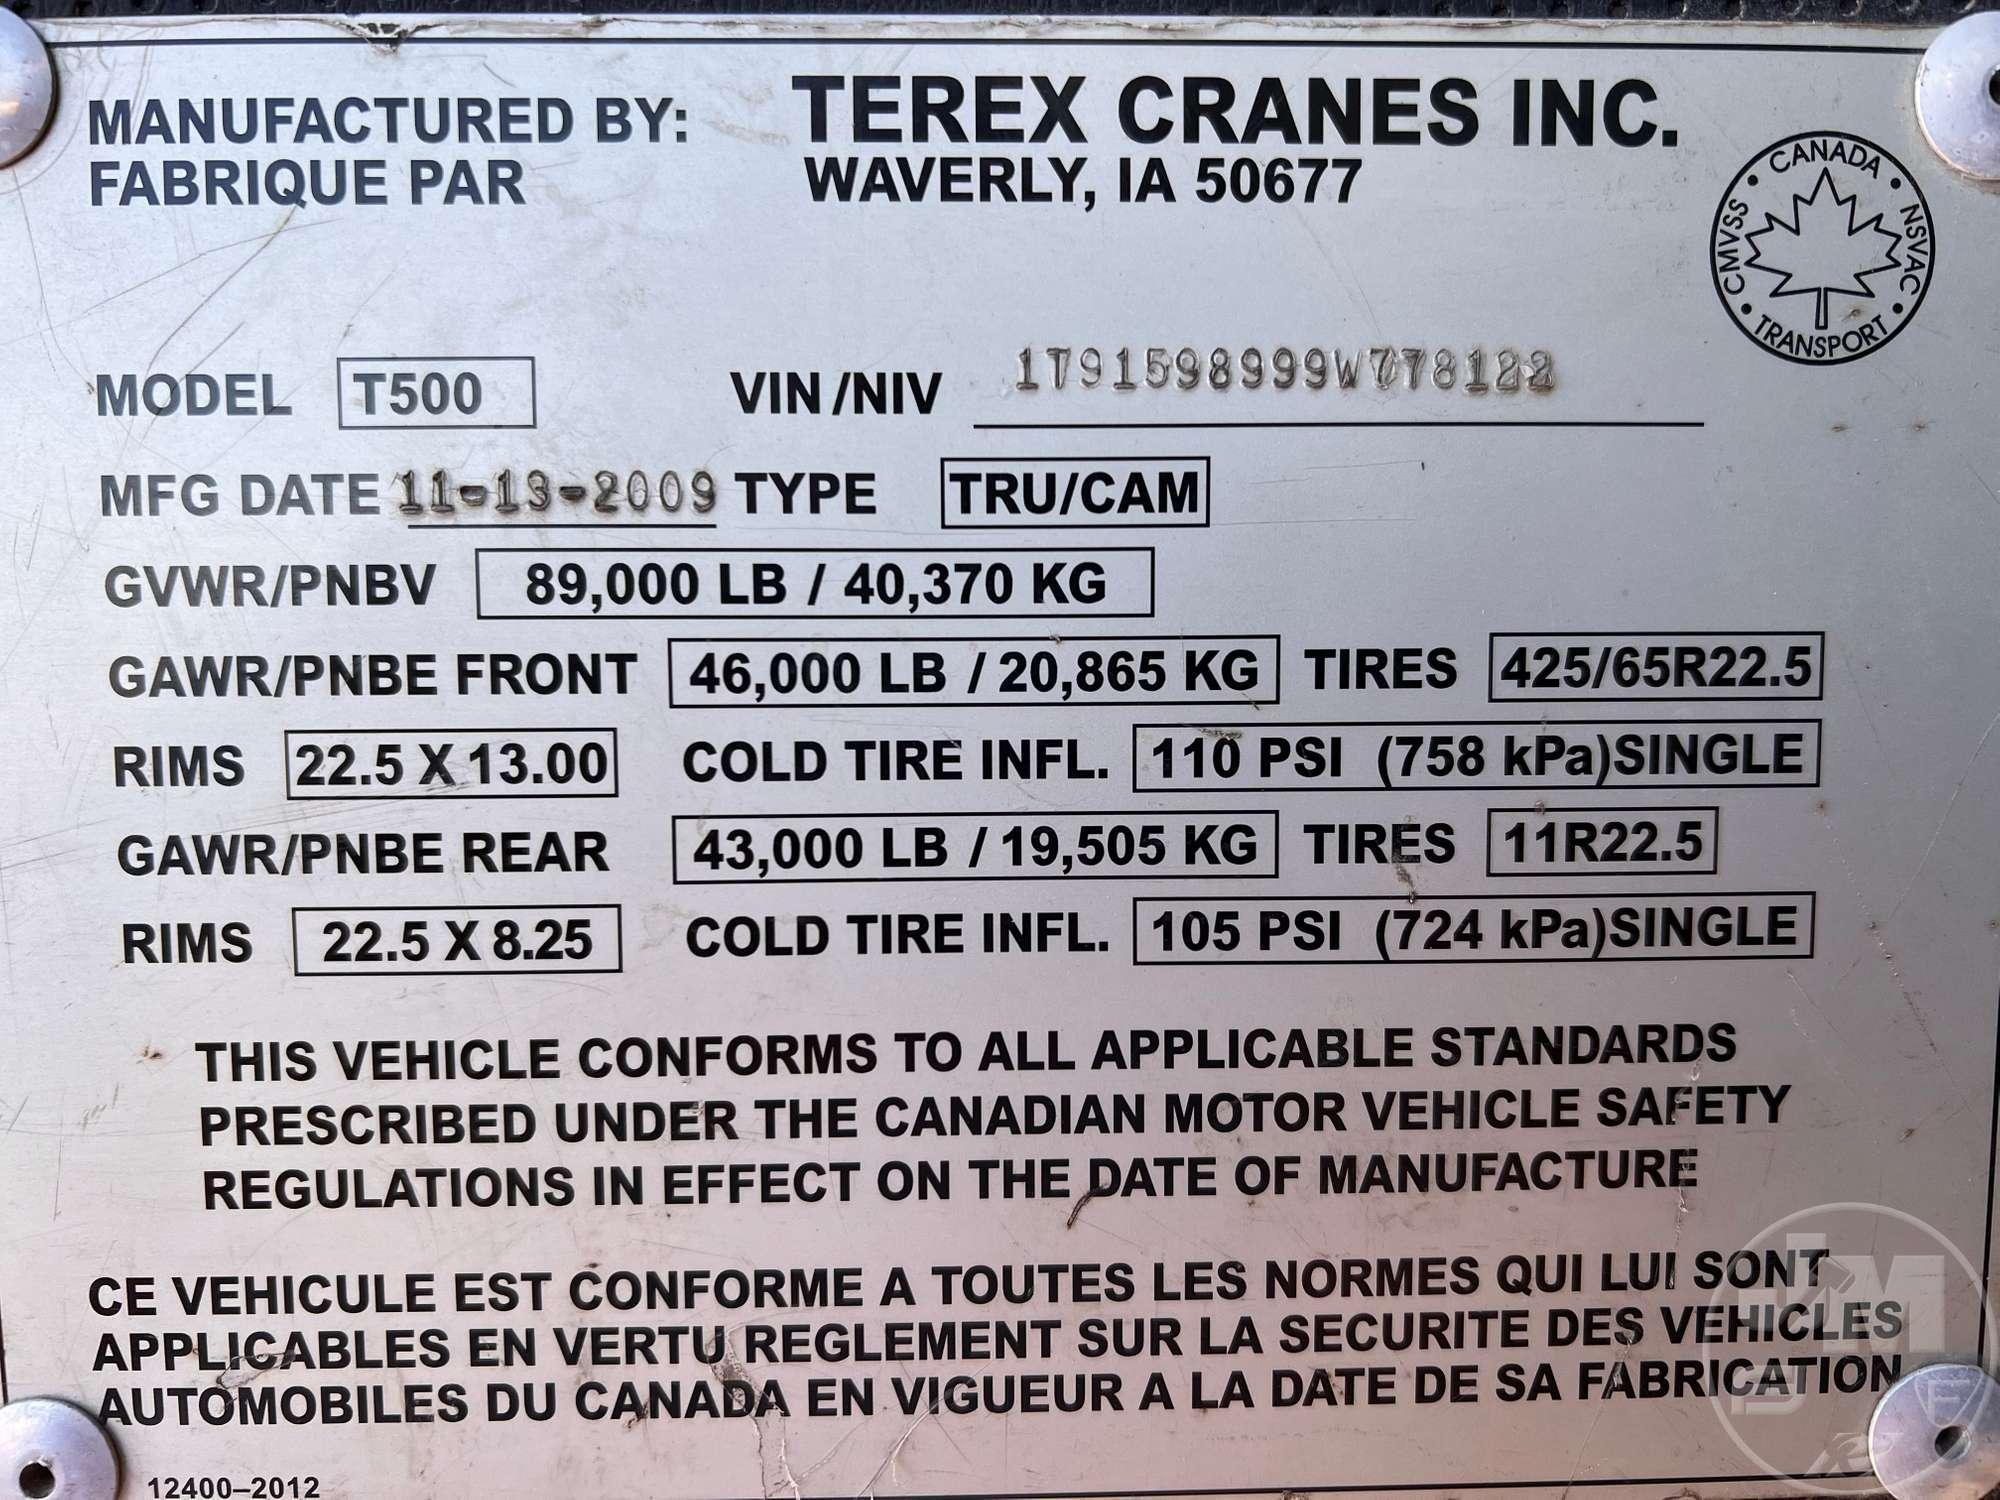 2009 TEREX T560-1 VIN: 1T91598999W778122 TRUCK CRANE